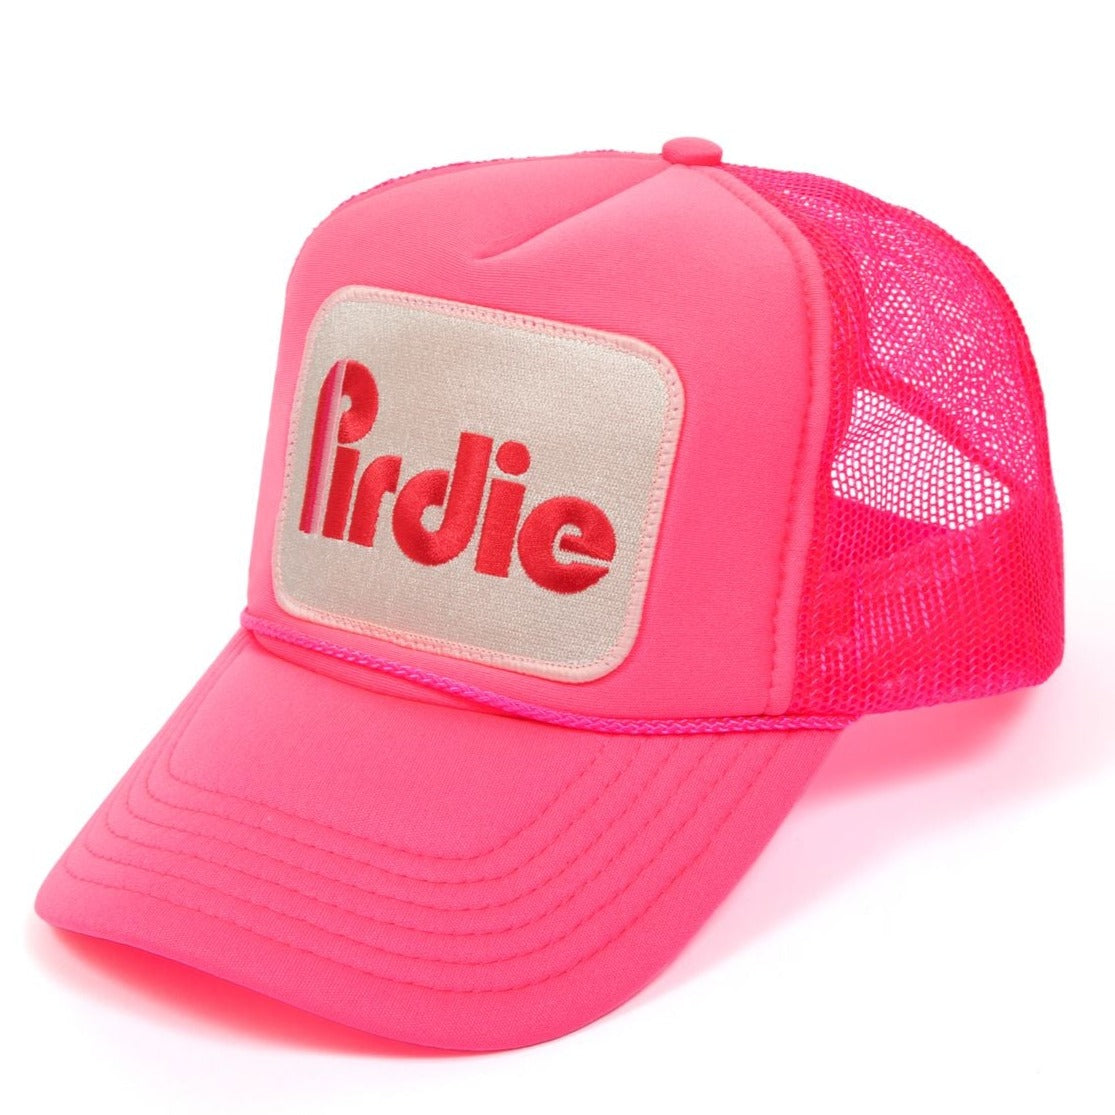 Pirdie Trucker Hat